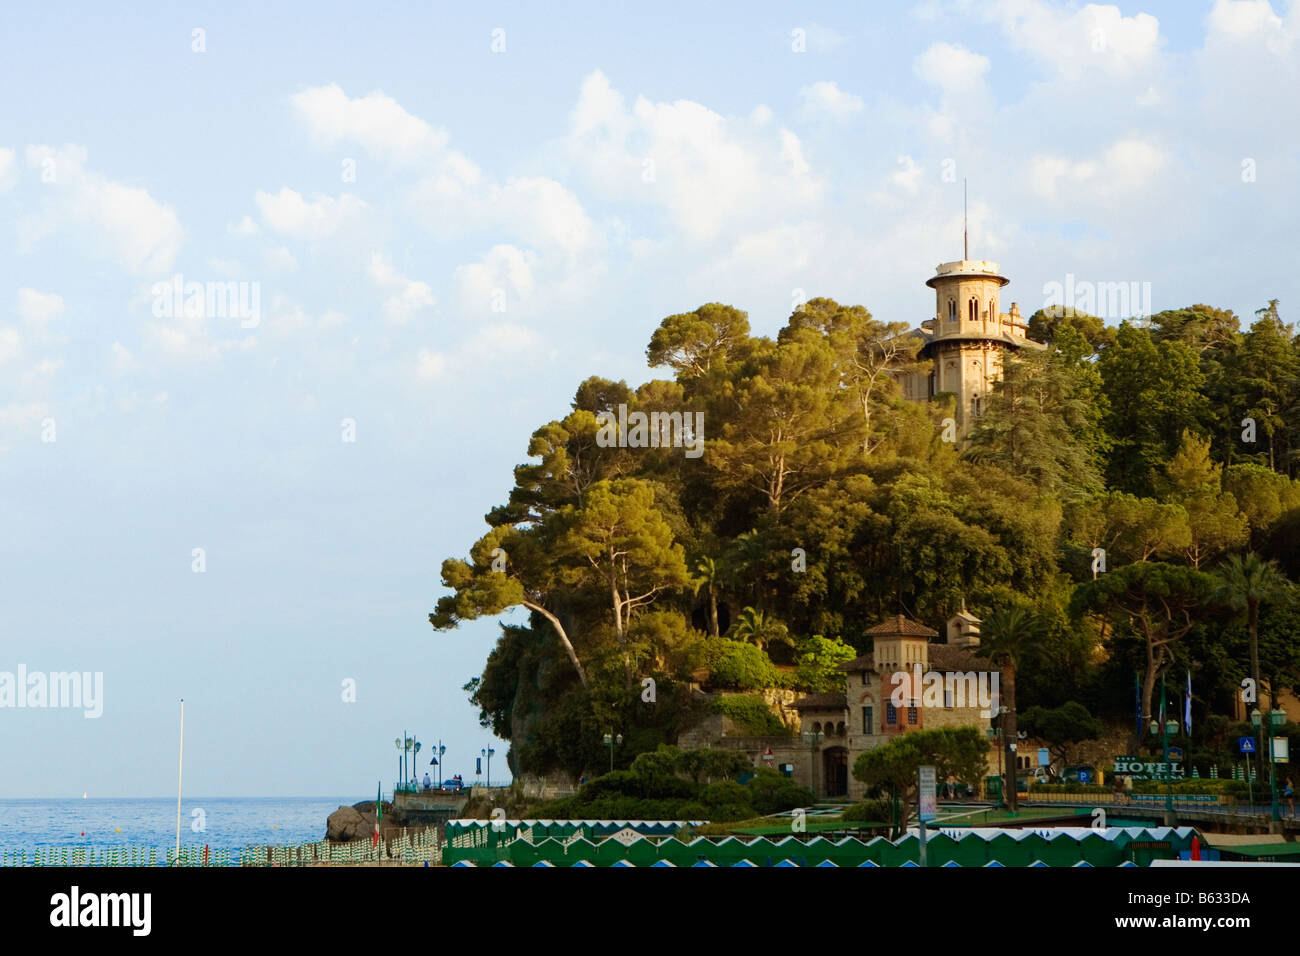 Building surrounded by trees, Italian Riviera, Santa Margherita Ligure, Mar Ligure, Genoa, Liguria, Italy Stock Photo